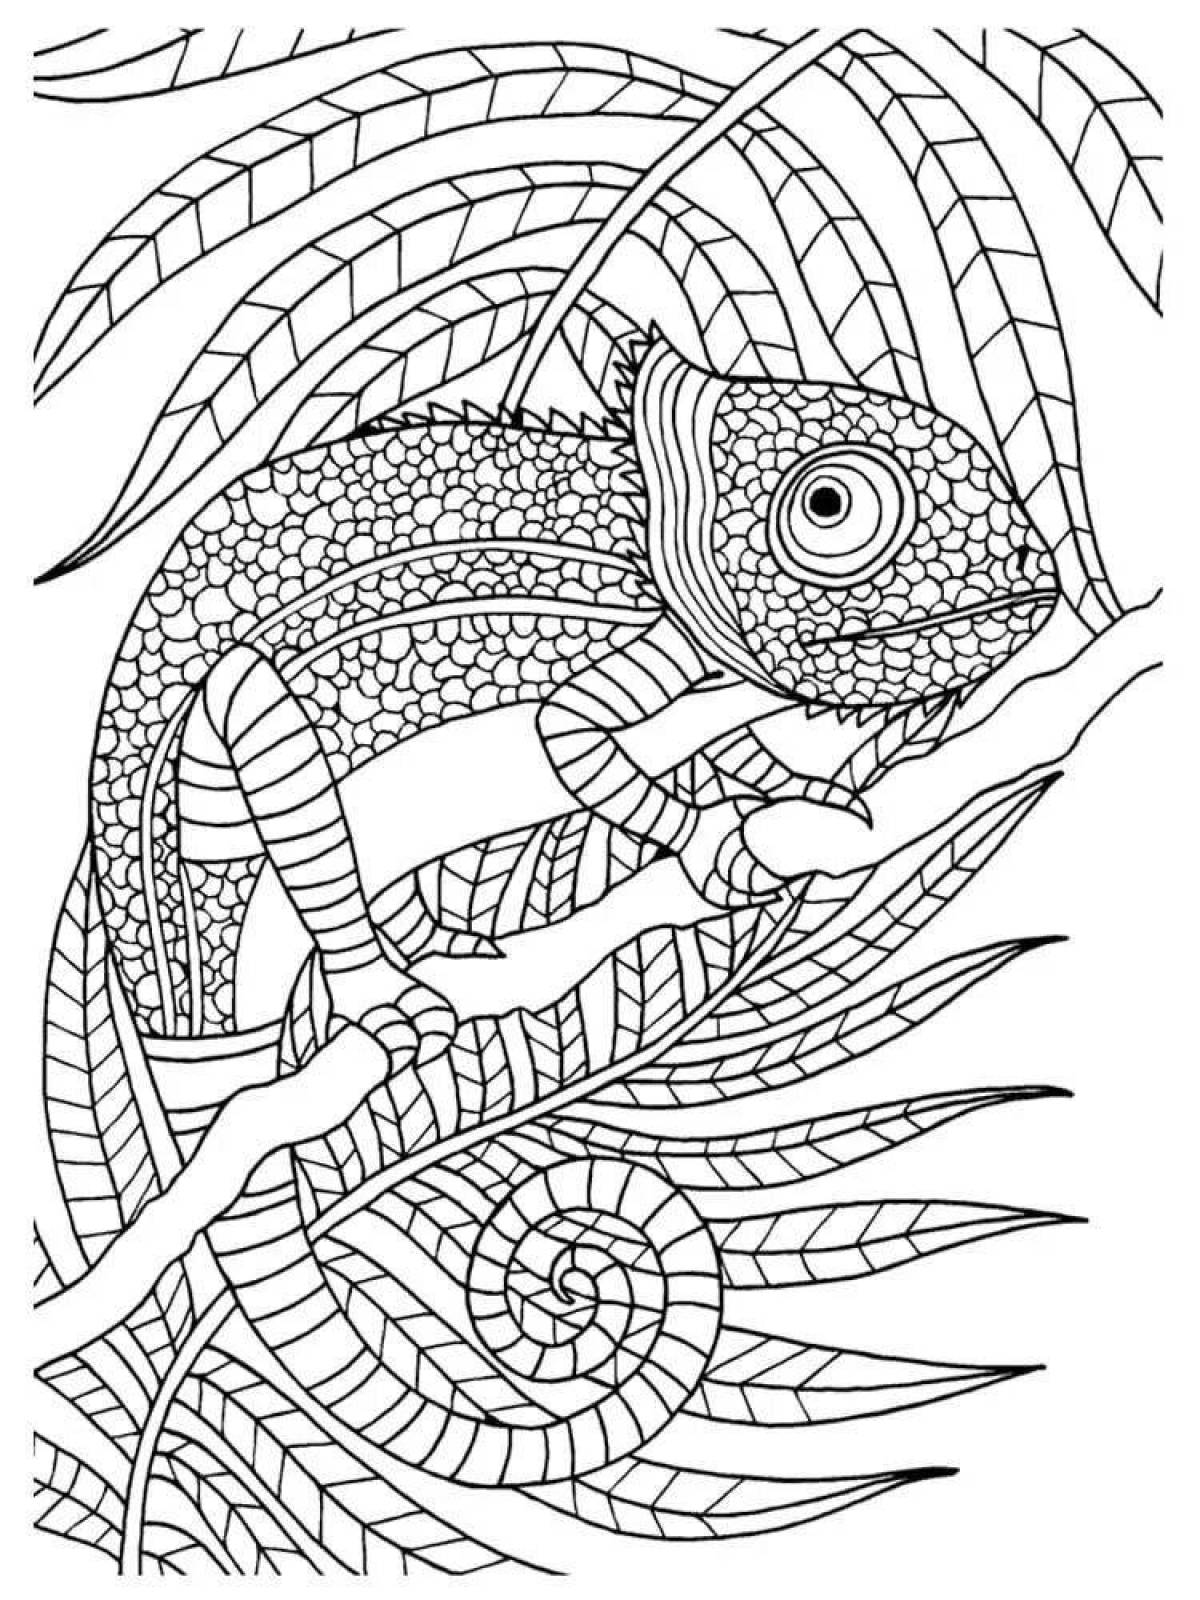 Ecstatic coloring page антистресс хамелеон